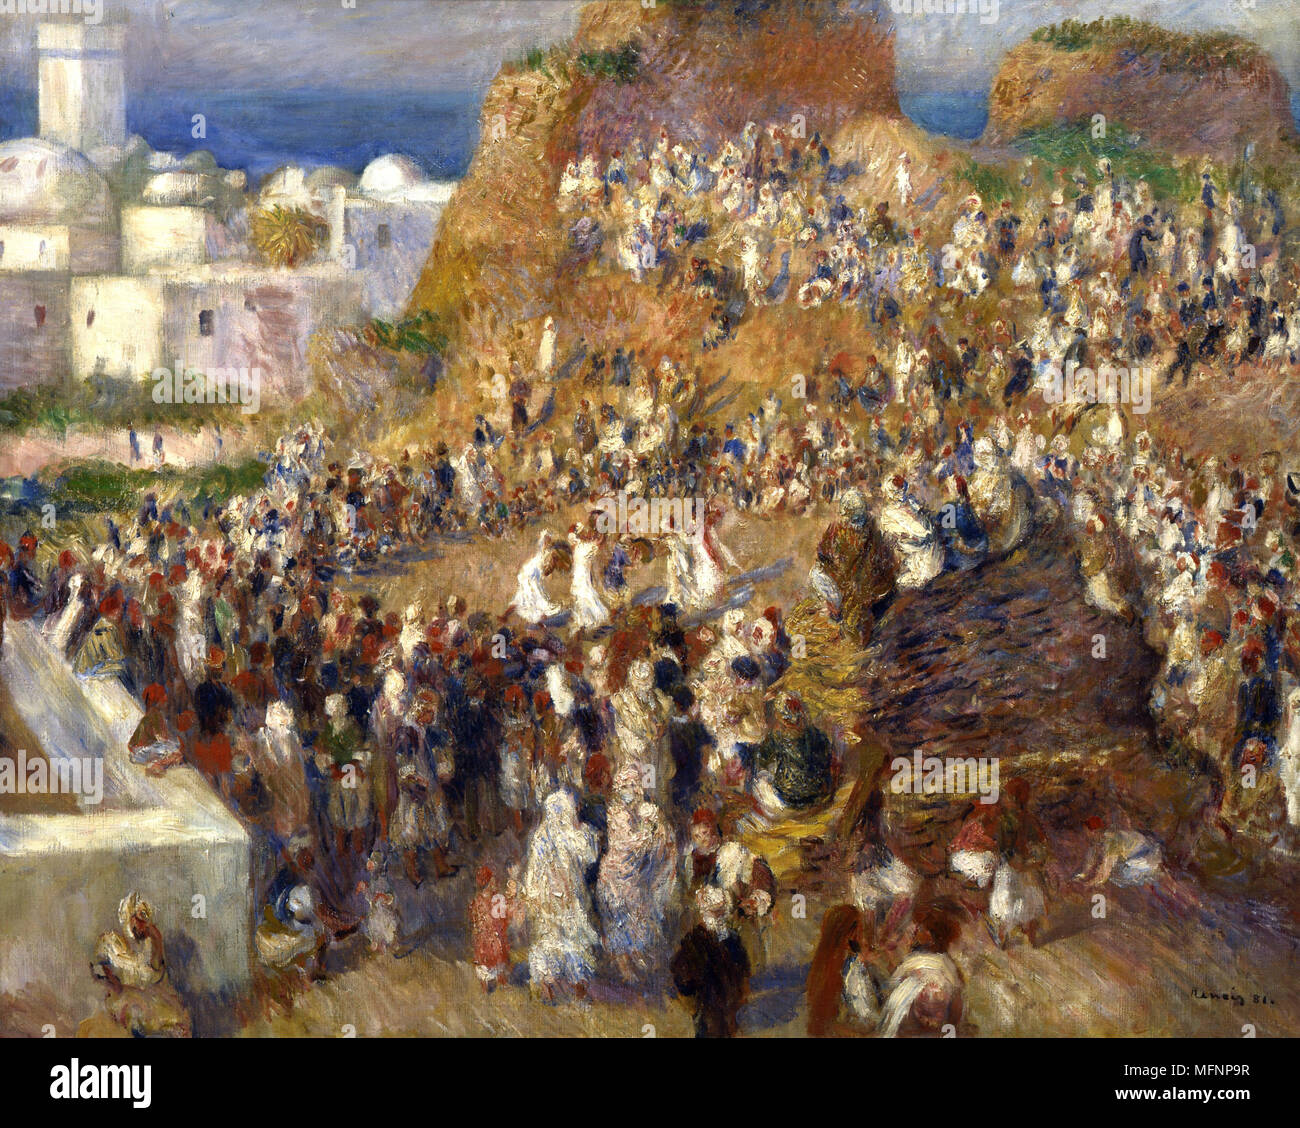 La moschea" (Arab Holiday) 1881: Pierre August Renoir (1841-1919), pittore francese . Olio su tela. Foto Stock